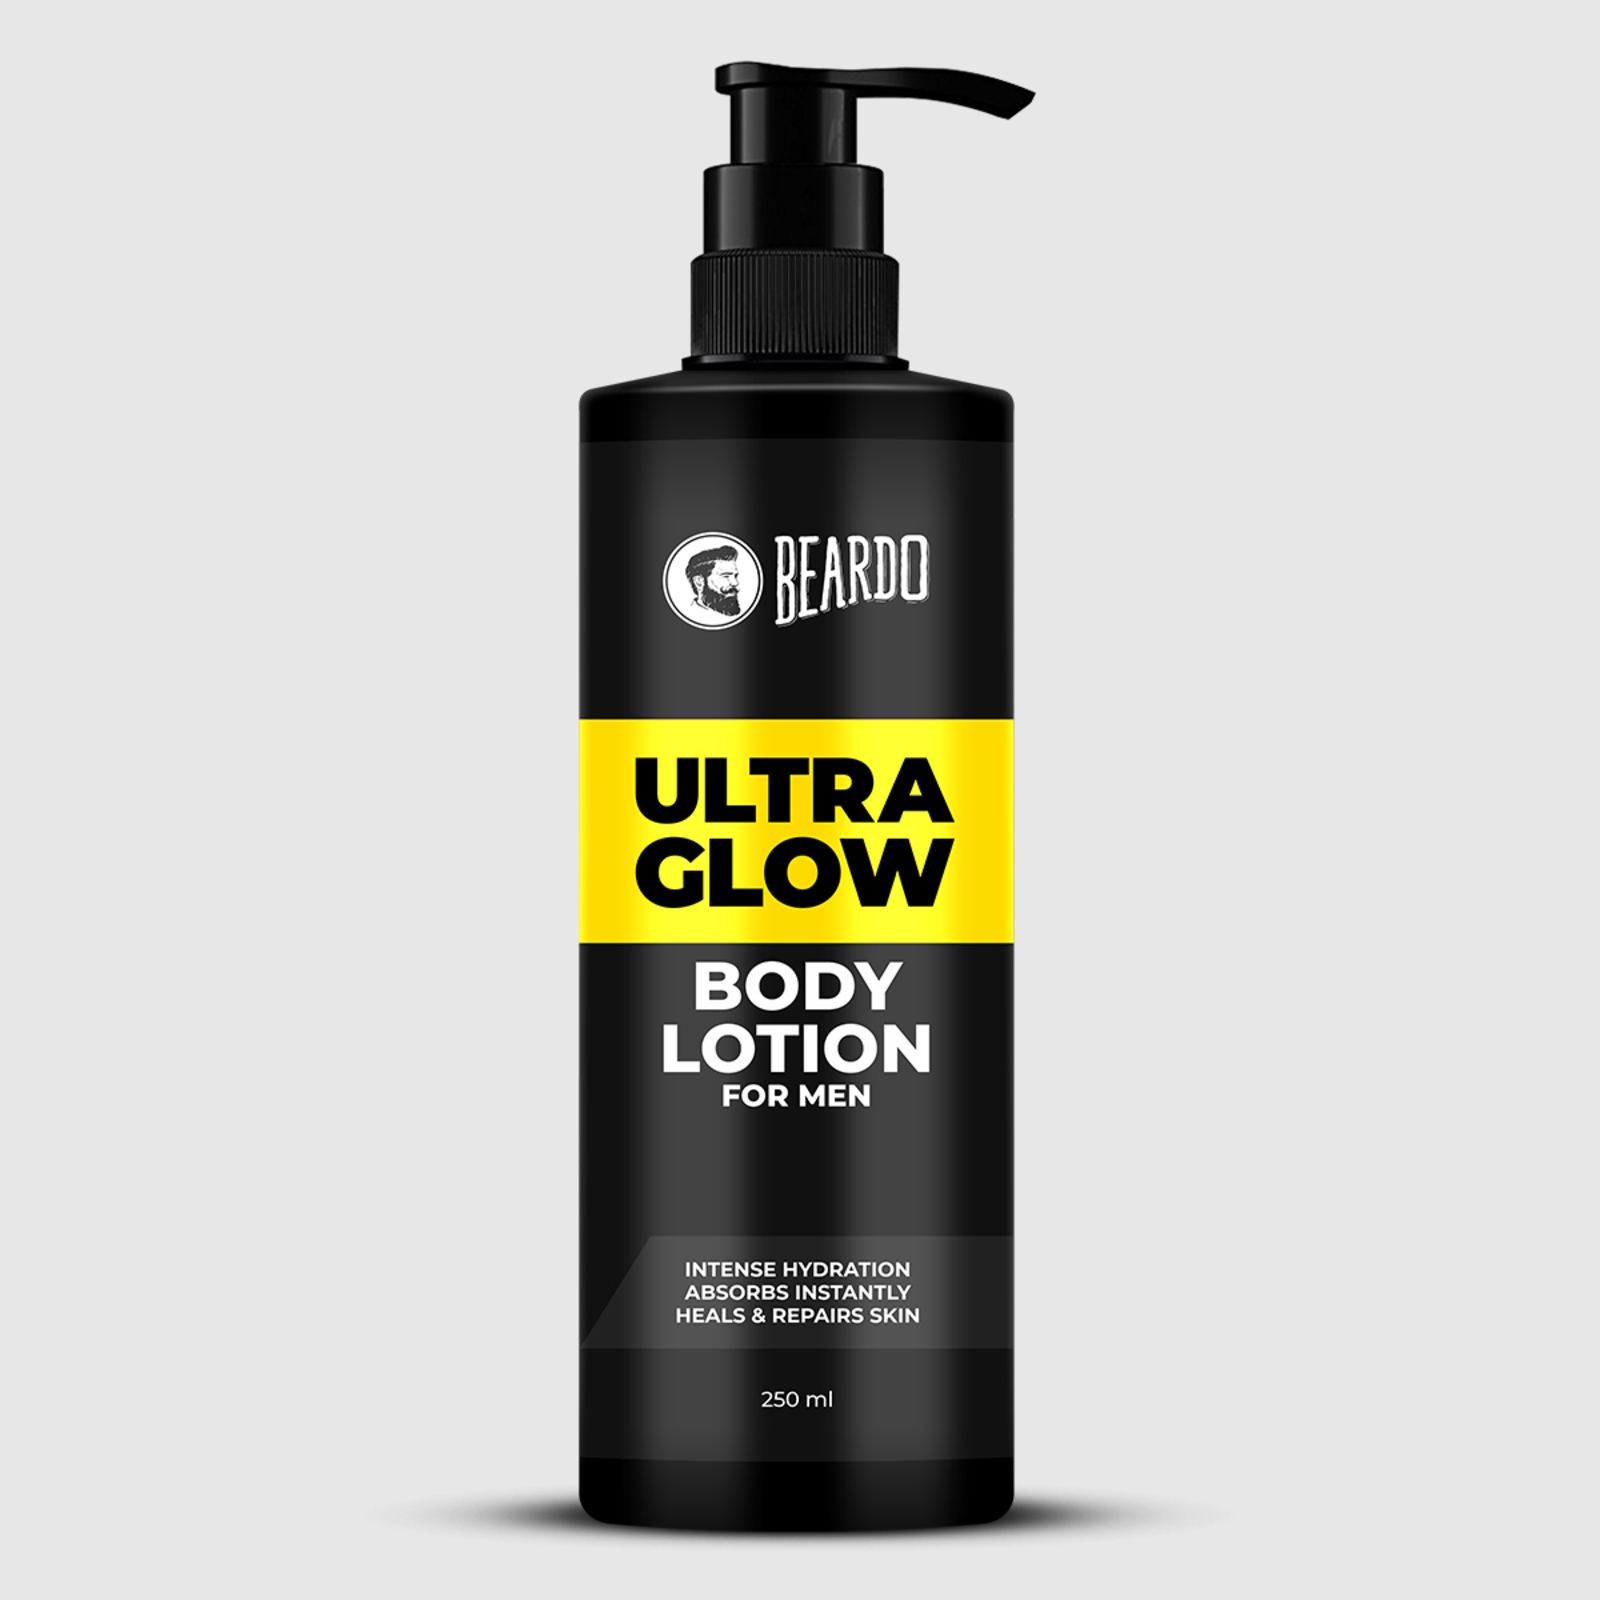 Beardo Ultraglow Body Lotion for Men   coupon code